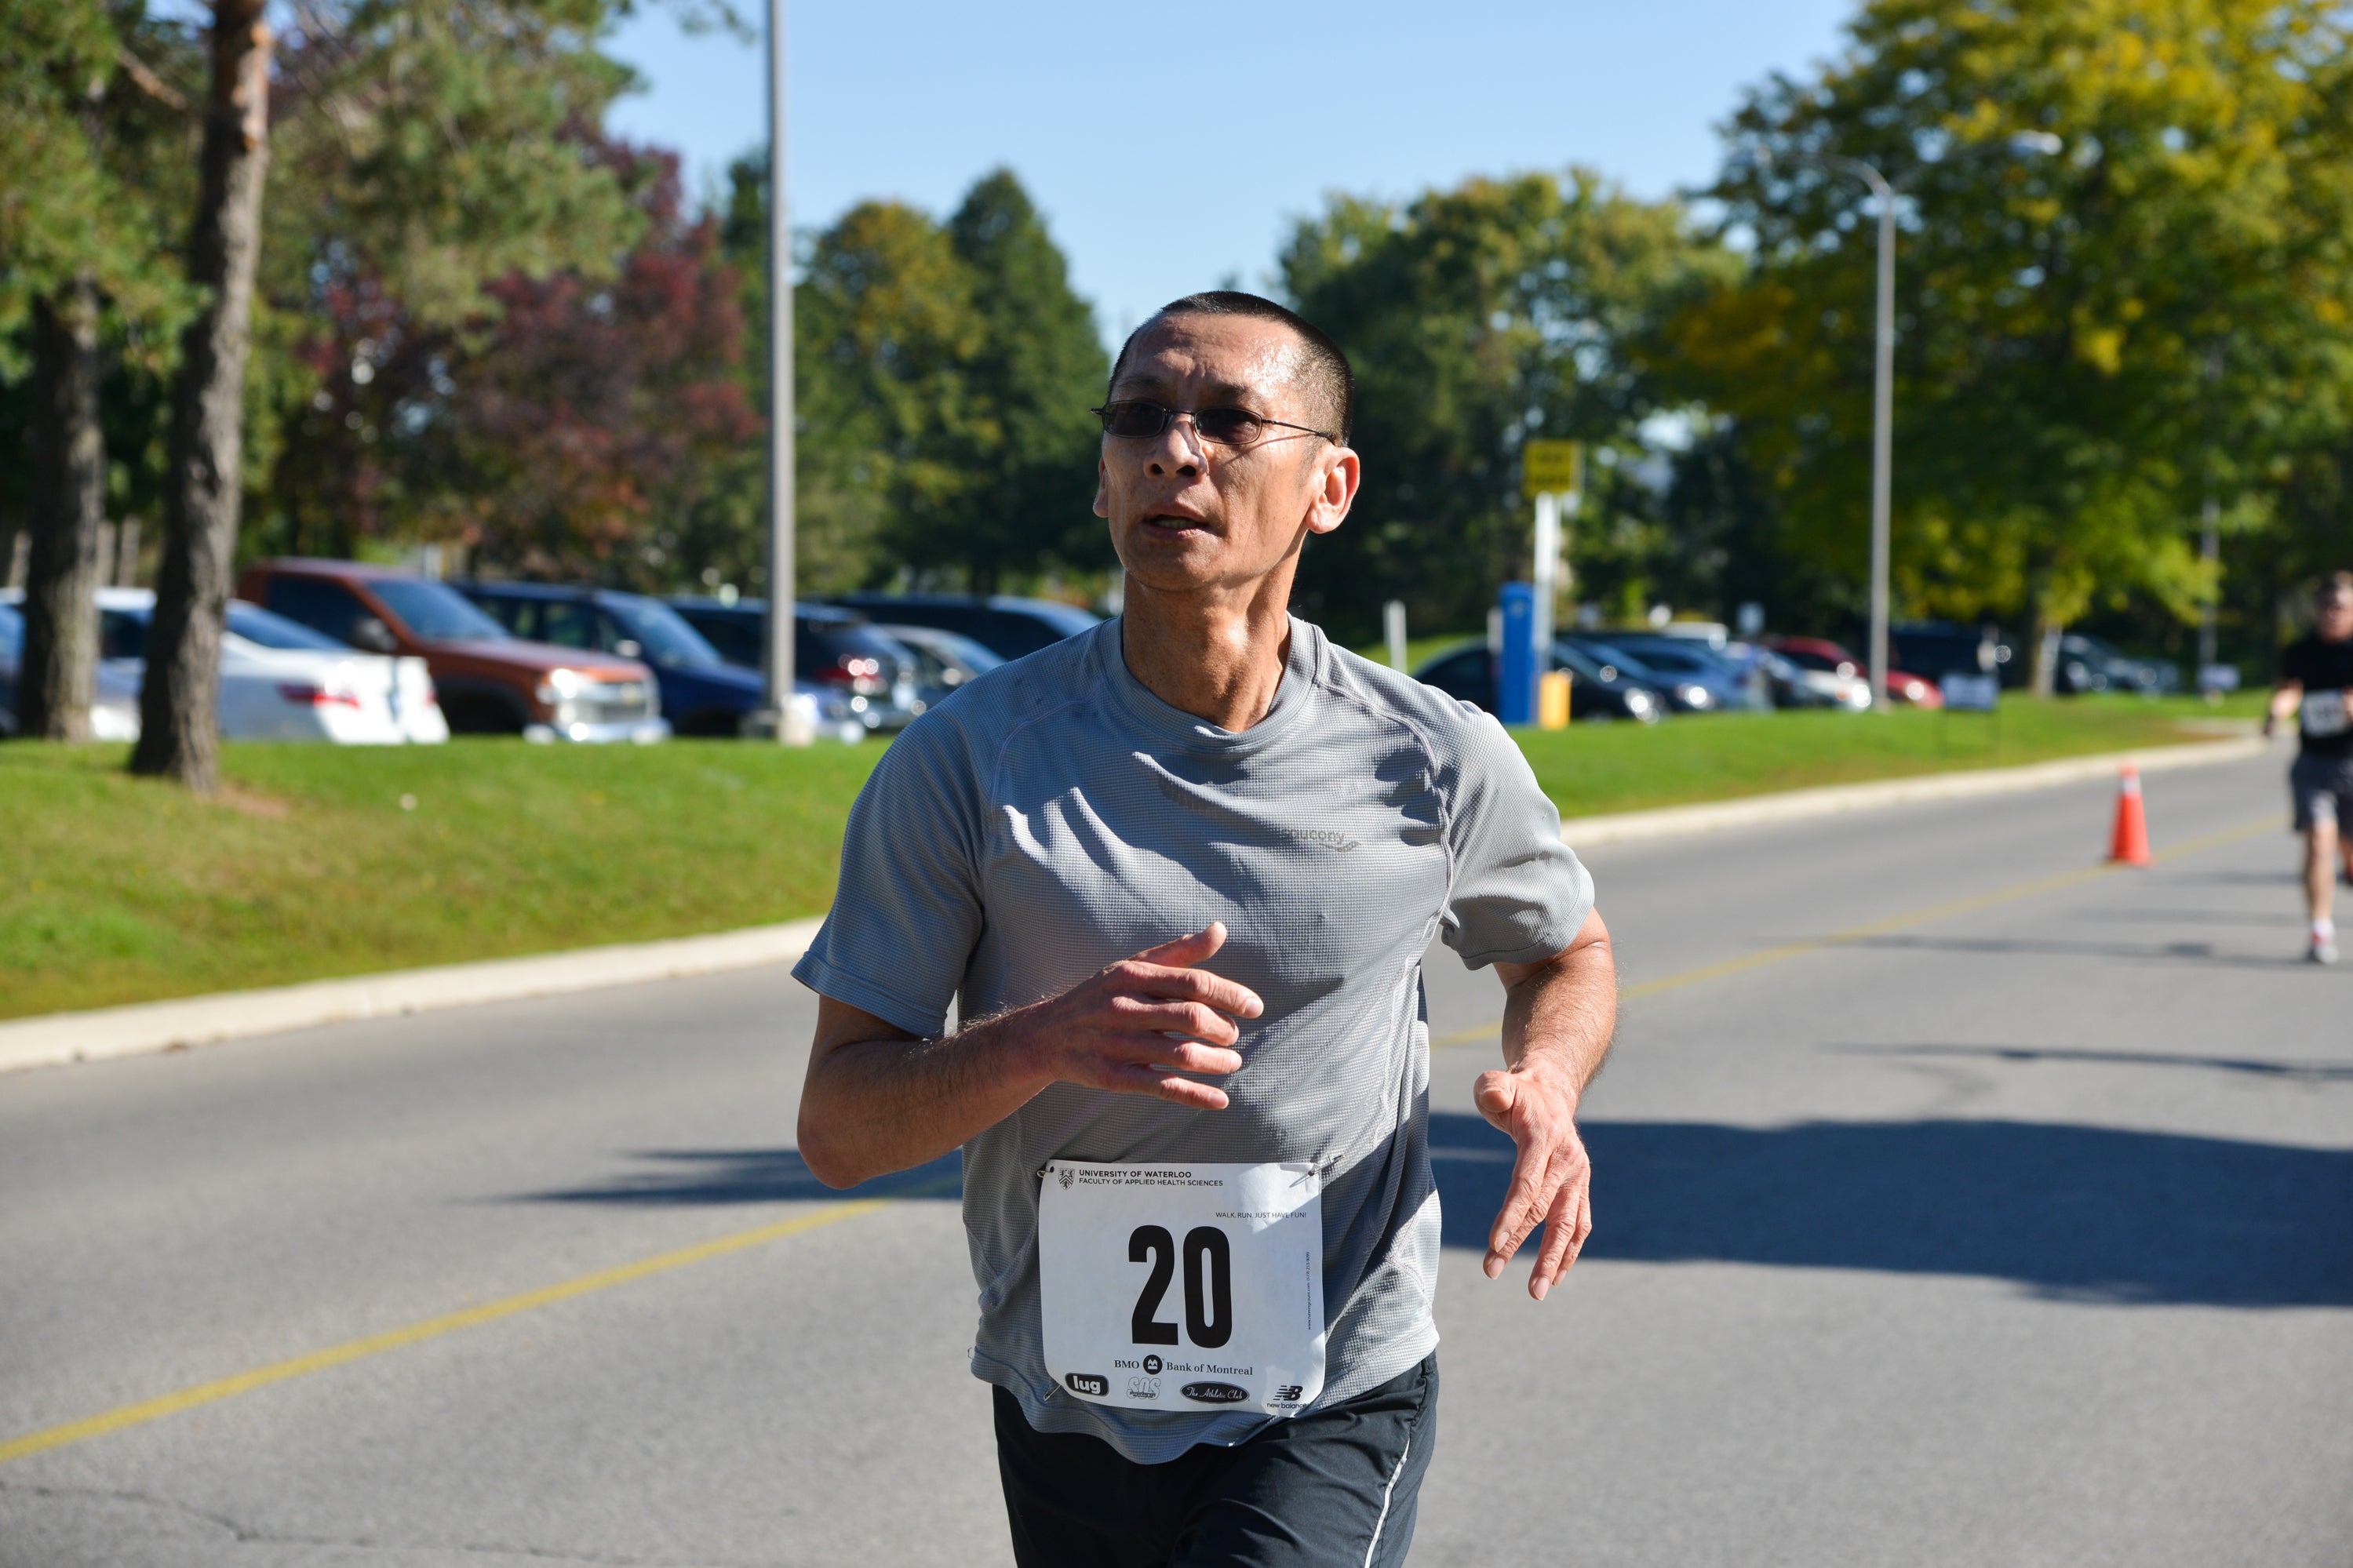 Participant running along ring road